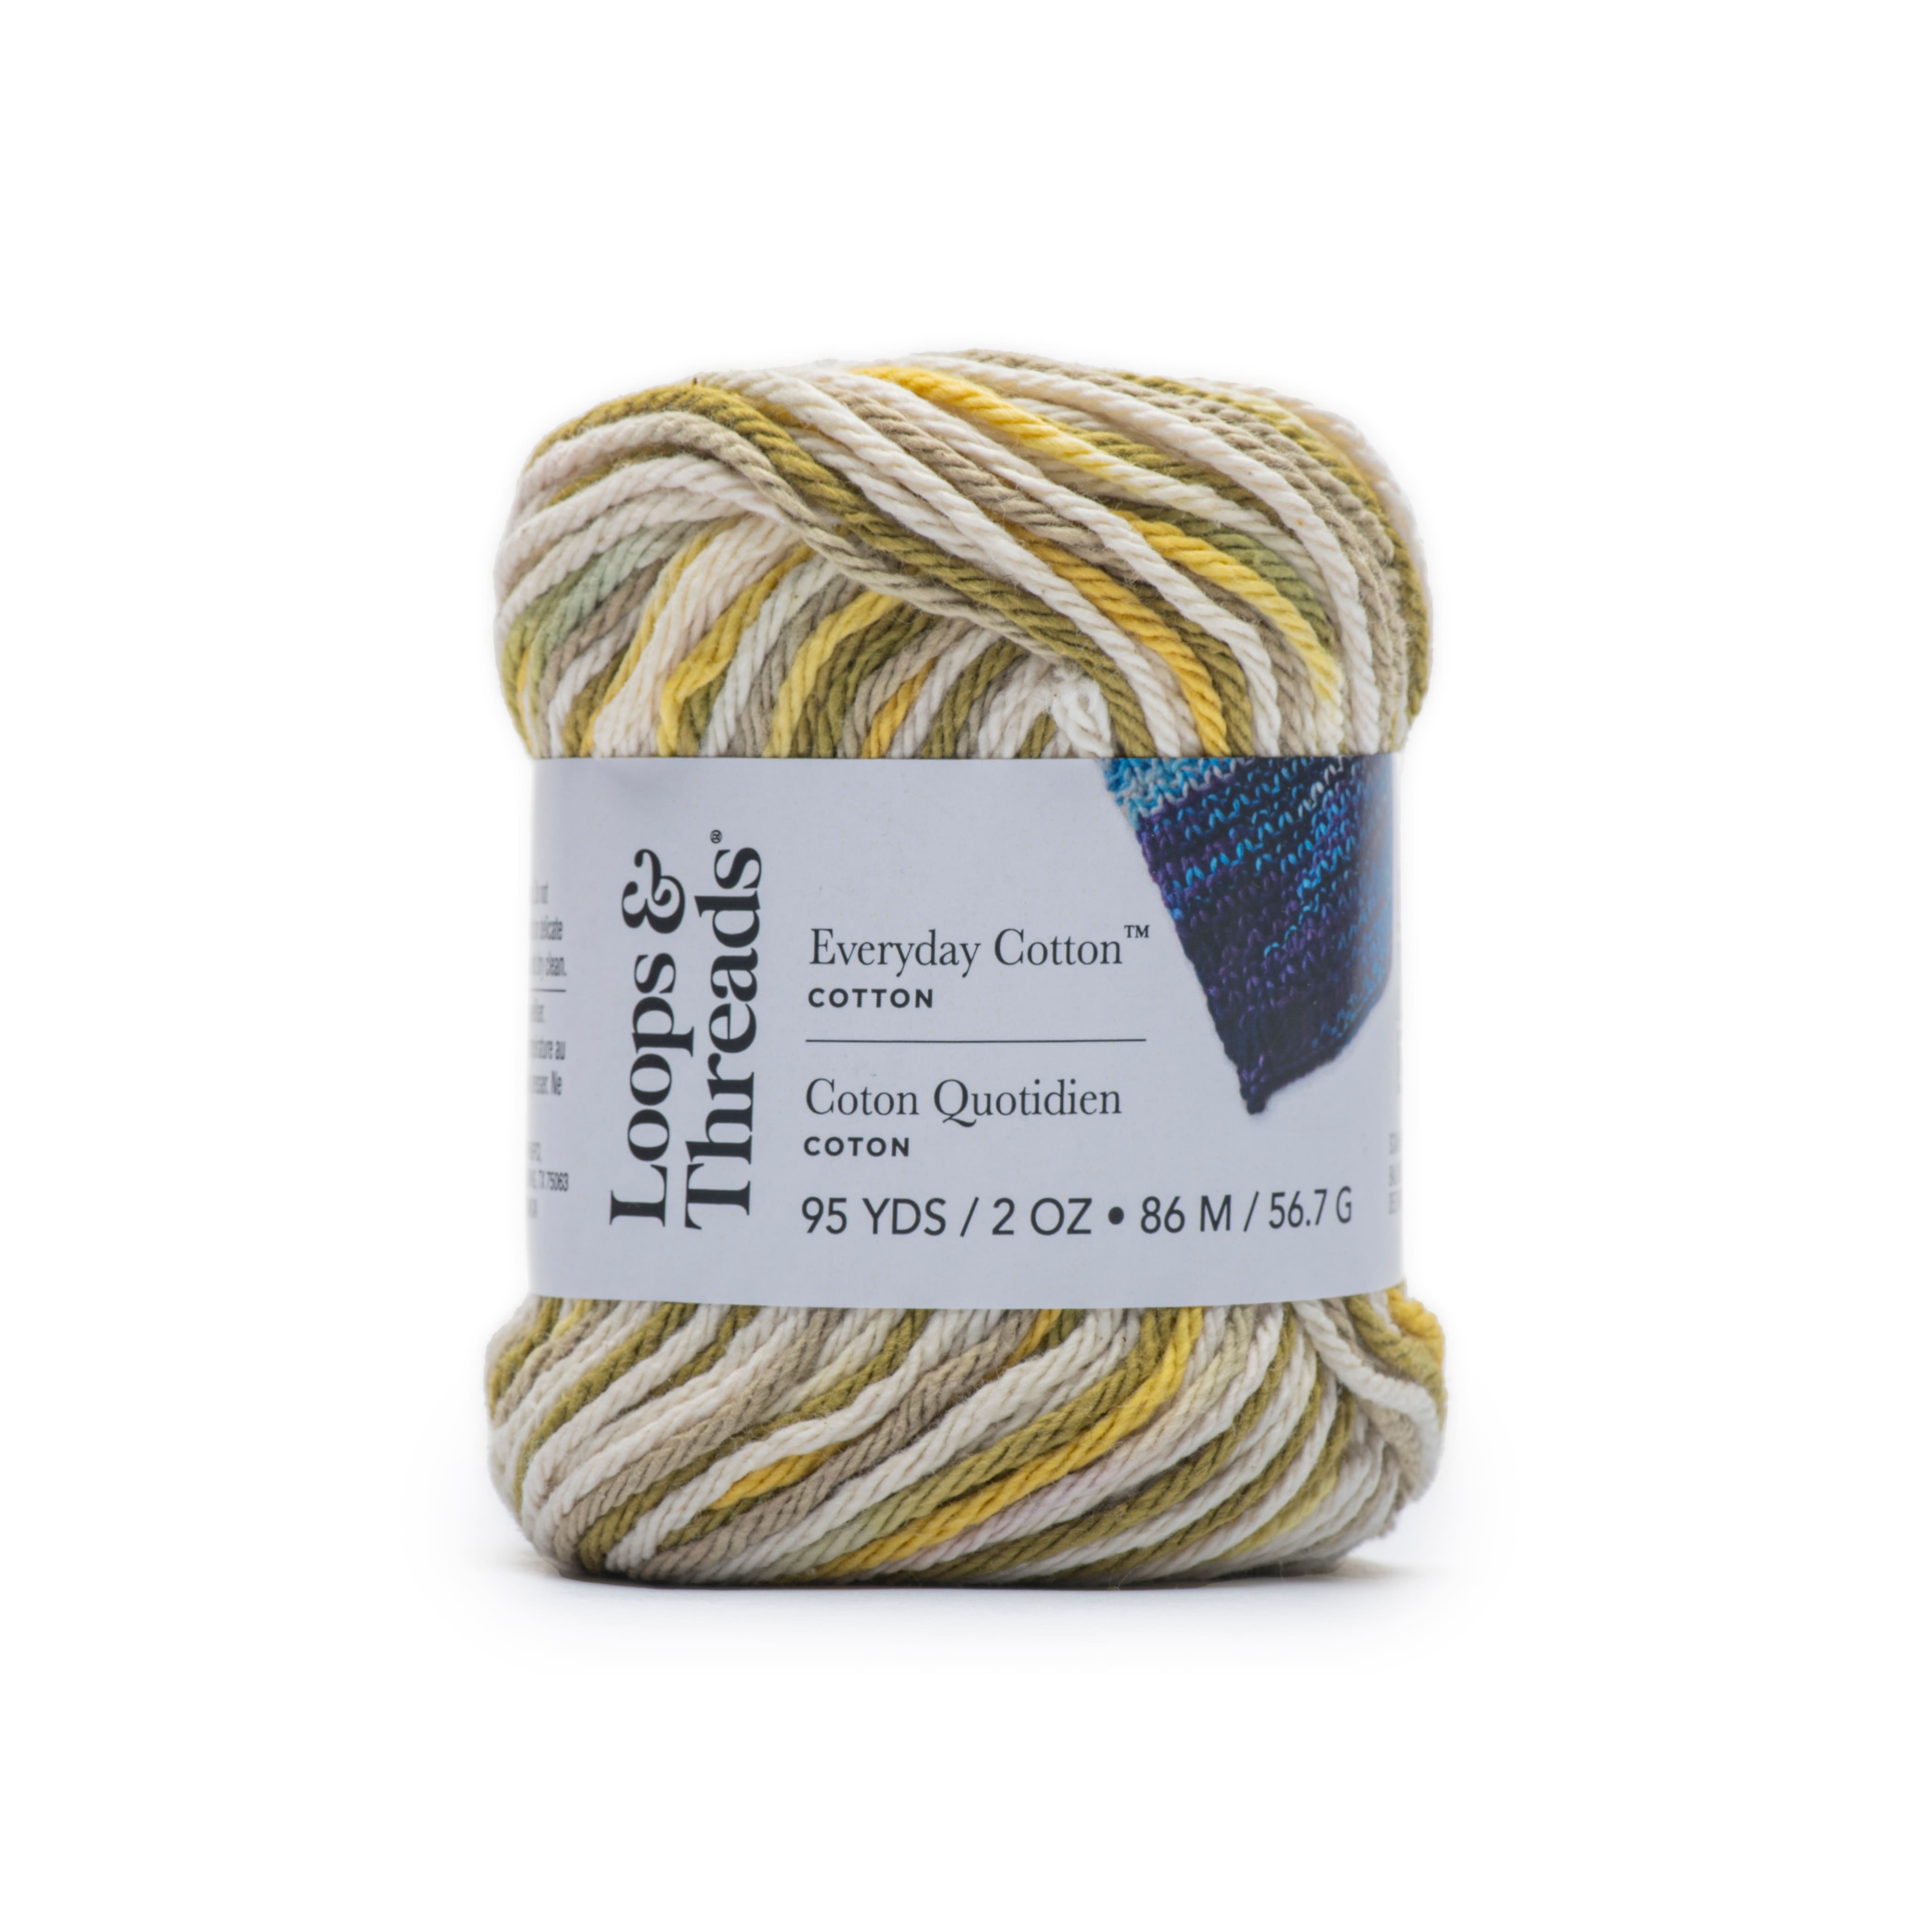 Delicate DK™ Yarn by Loops & Threads®